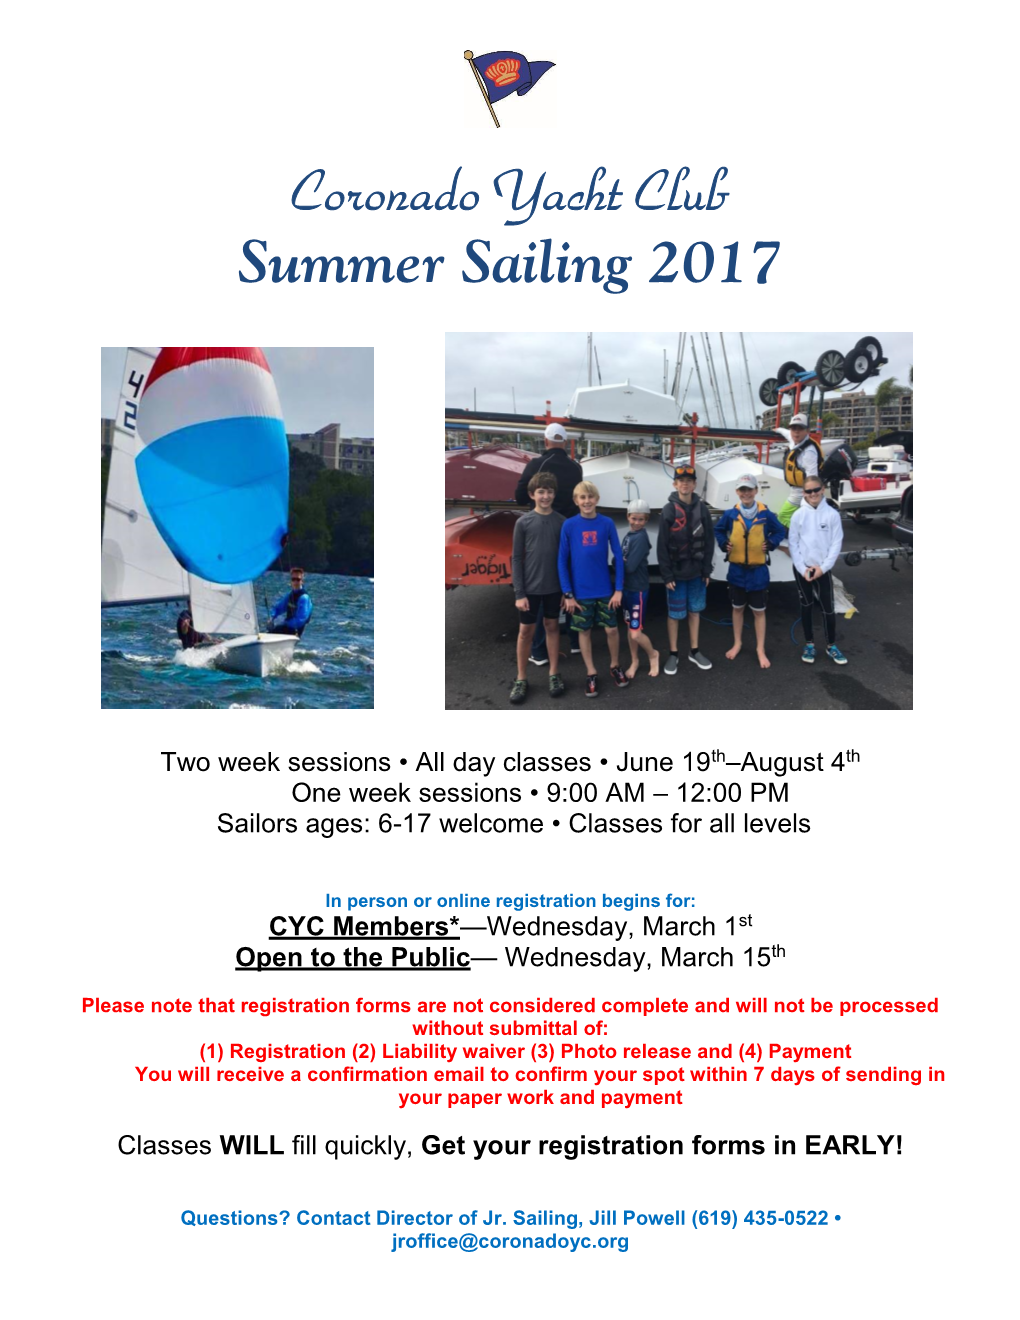 Coronado Yacht Club Summer Sailing 2017